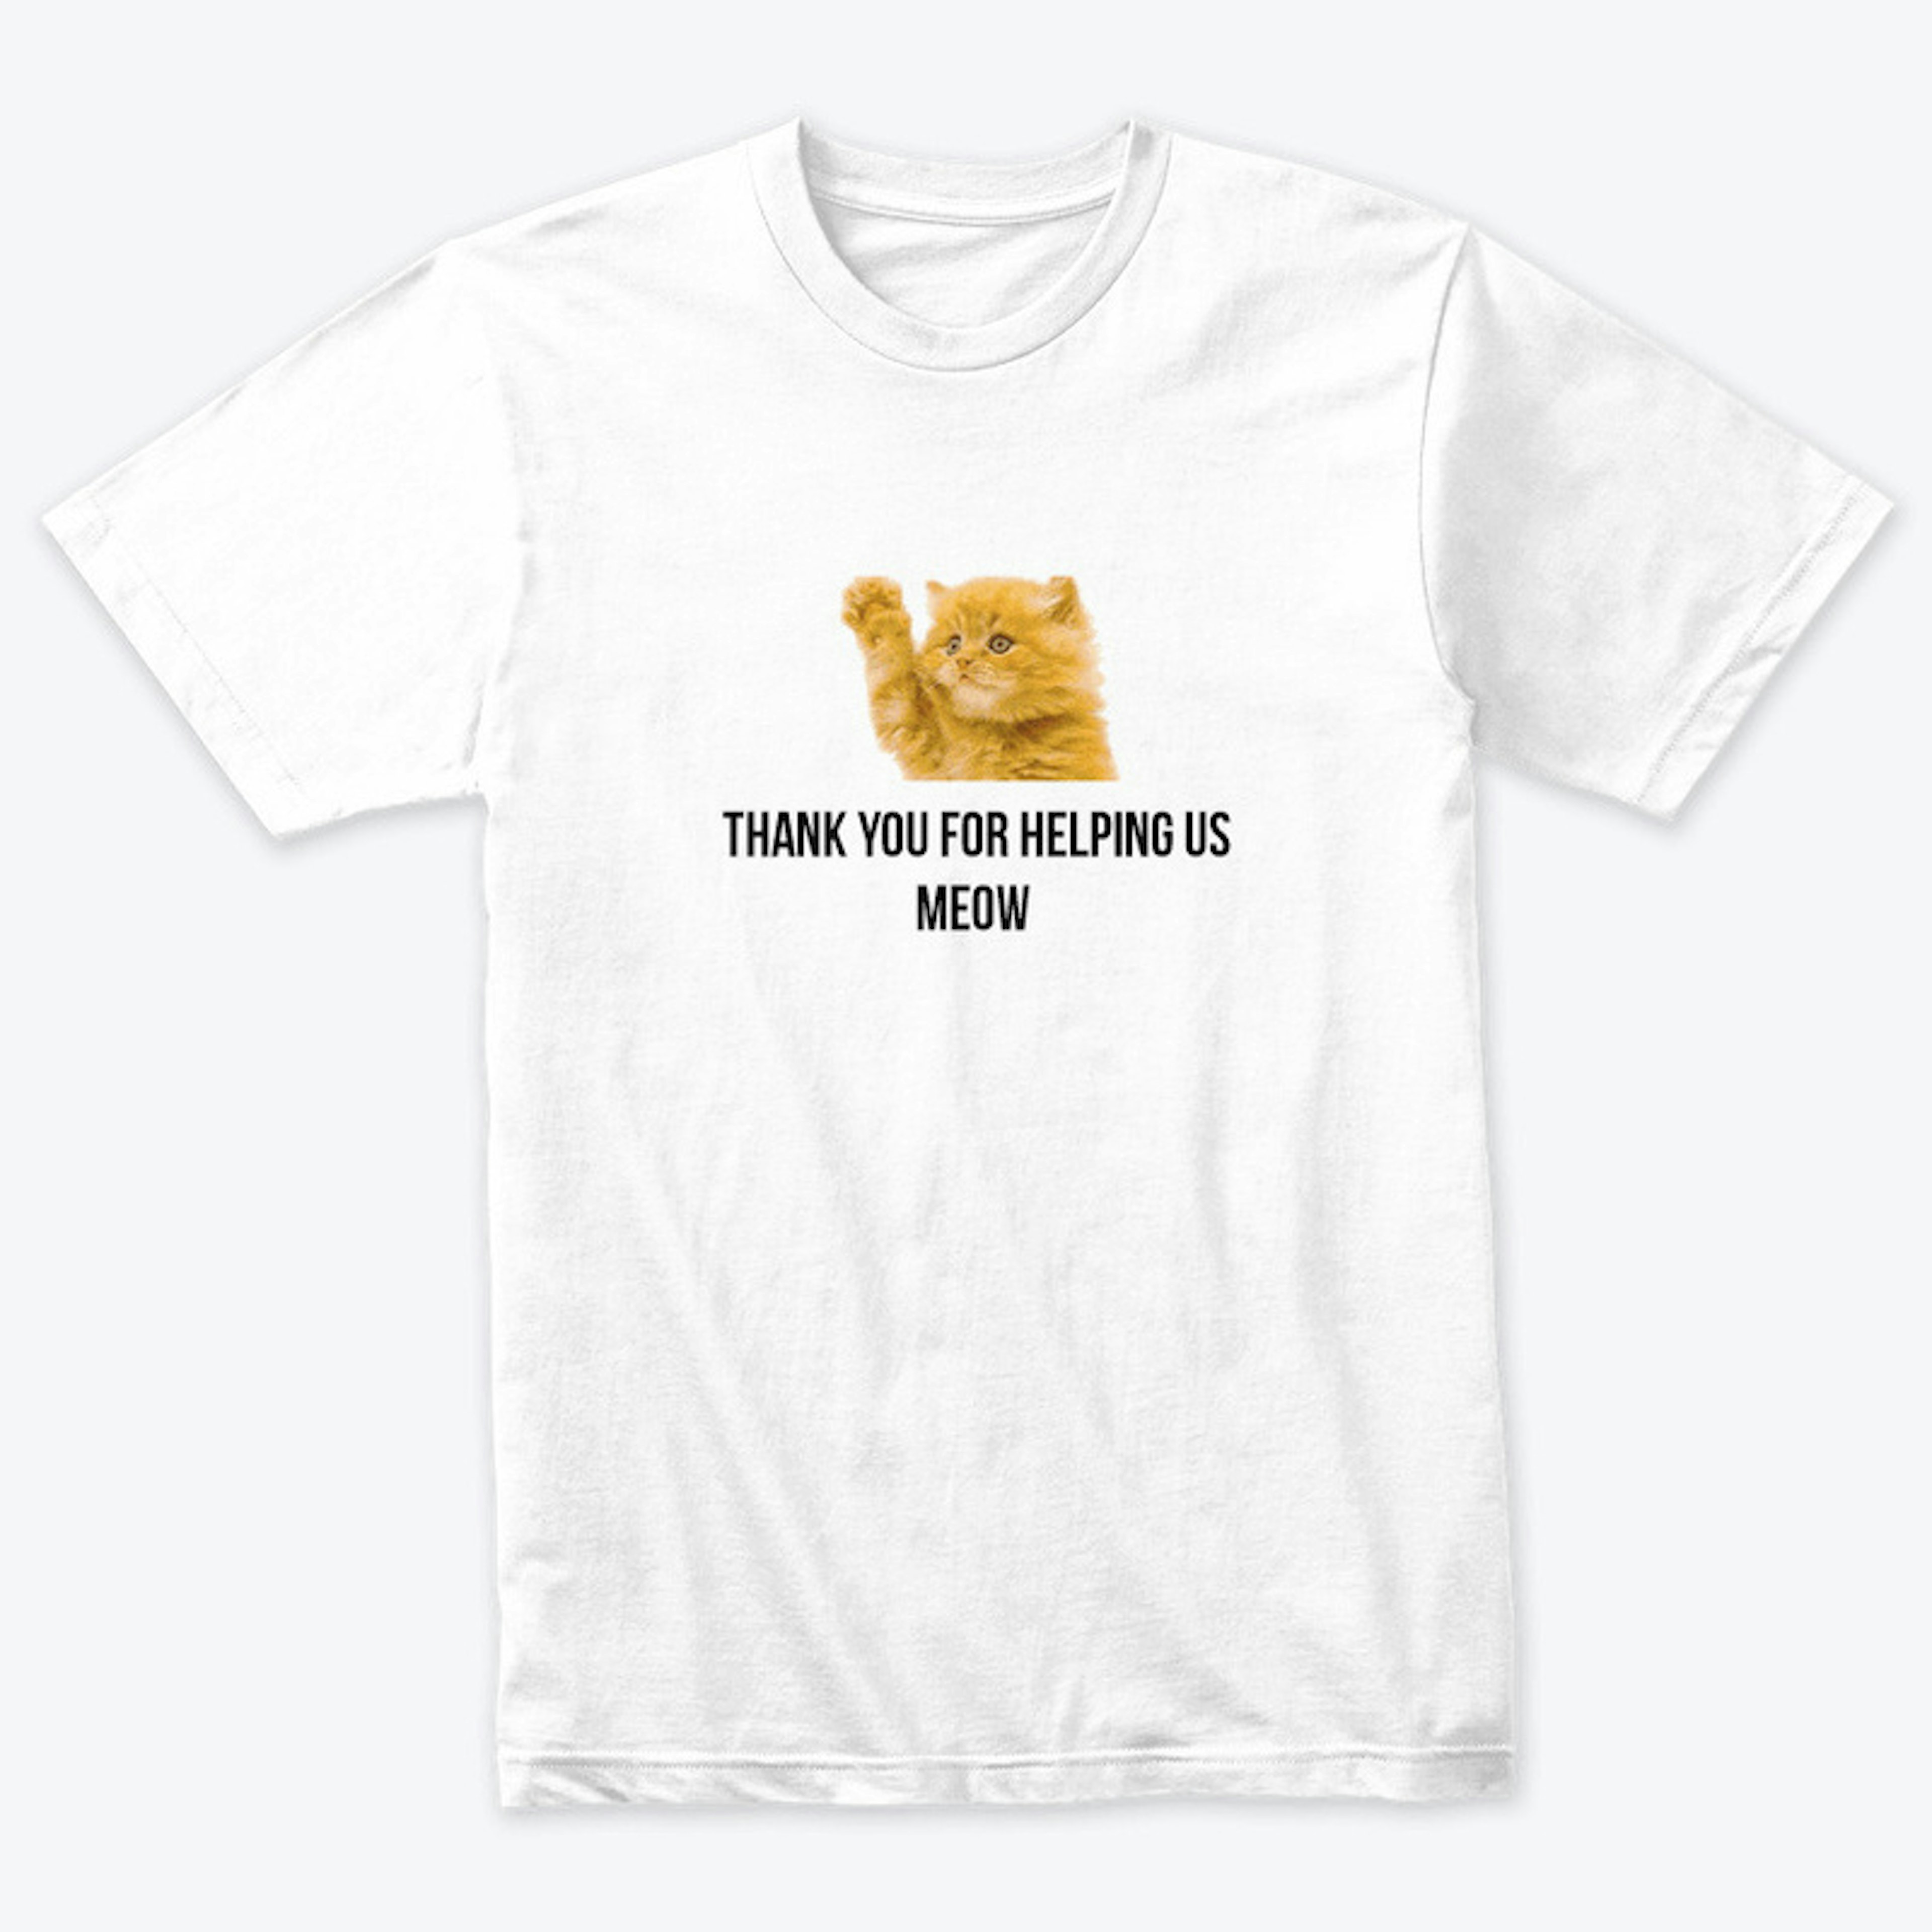 Men's T-Shirt (thank you)